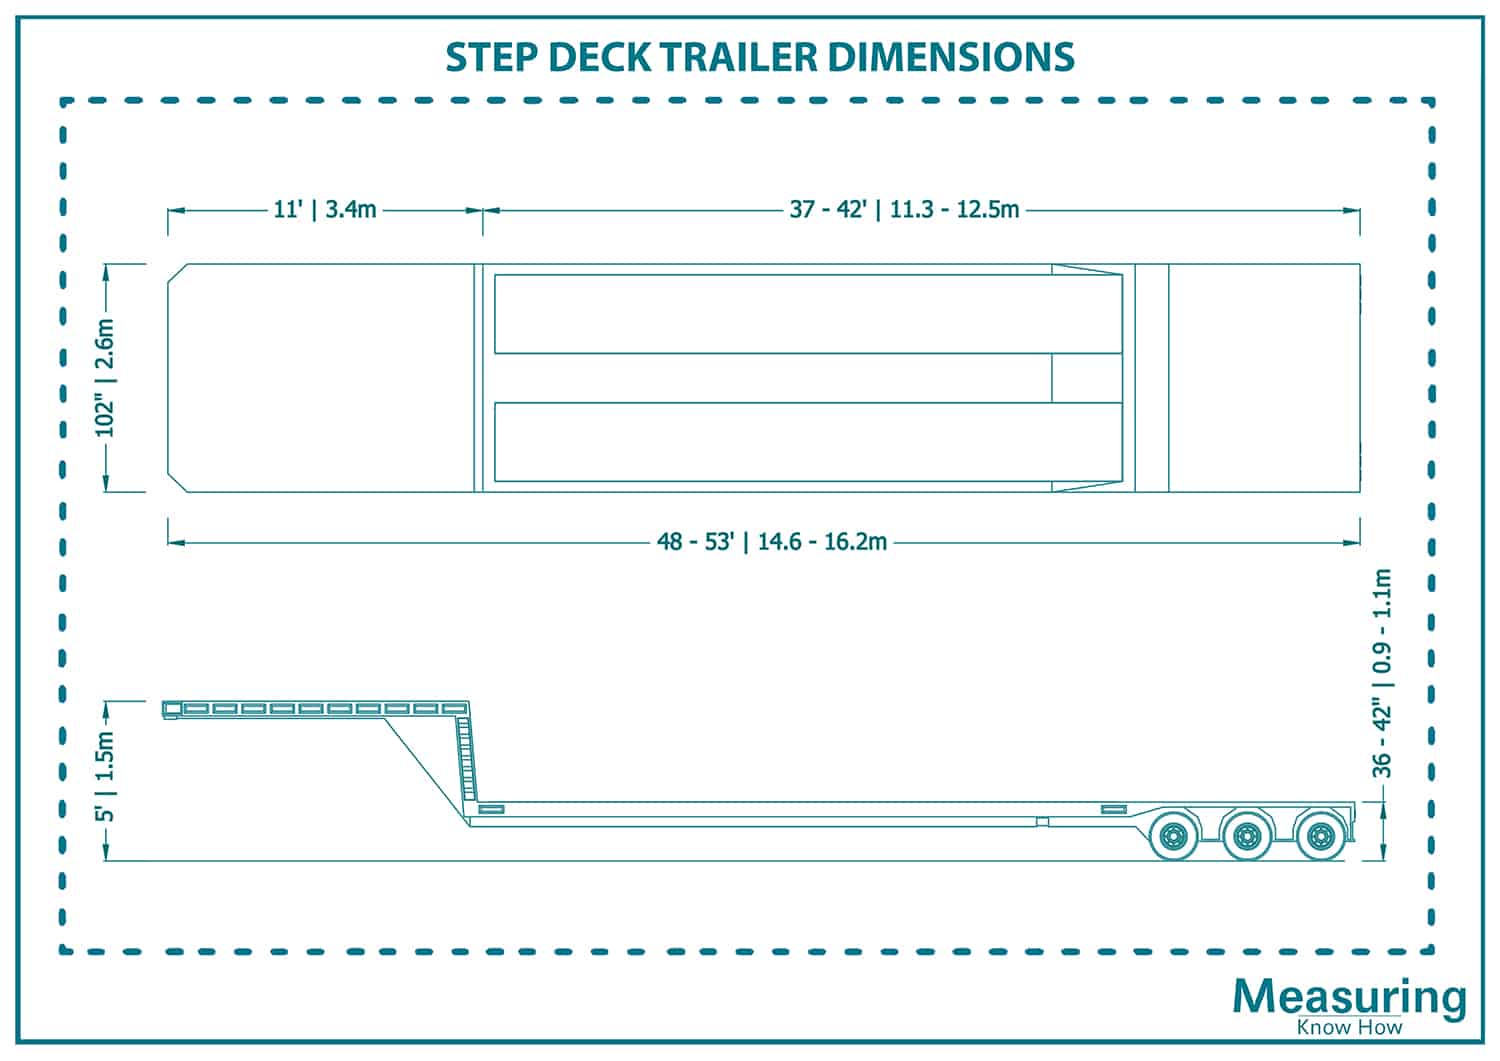 Step deck trailer dimensions